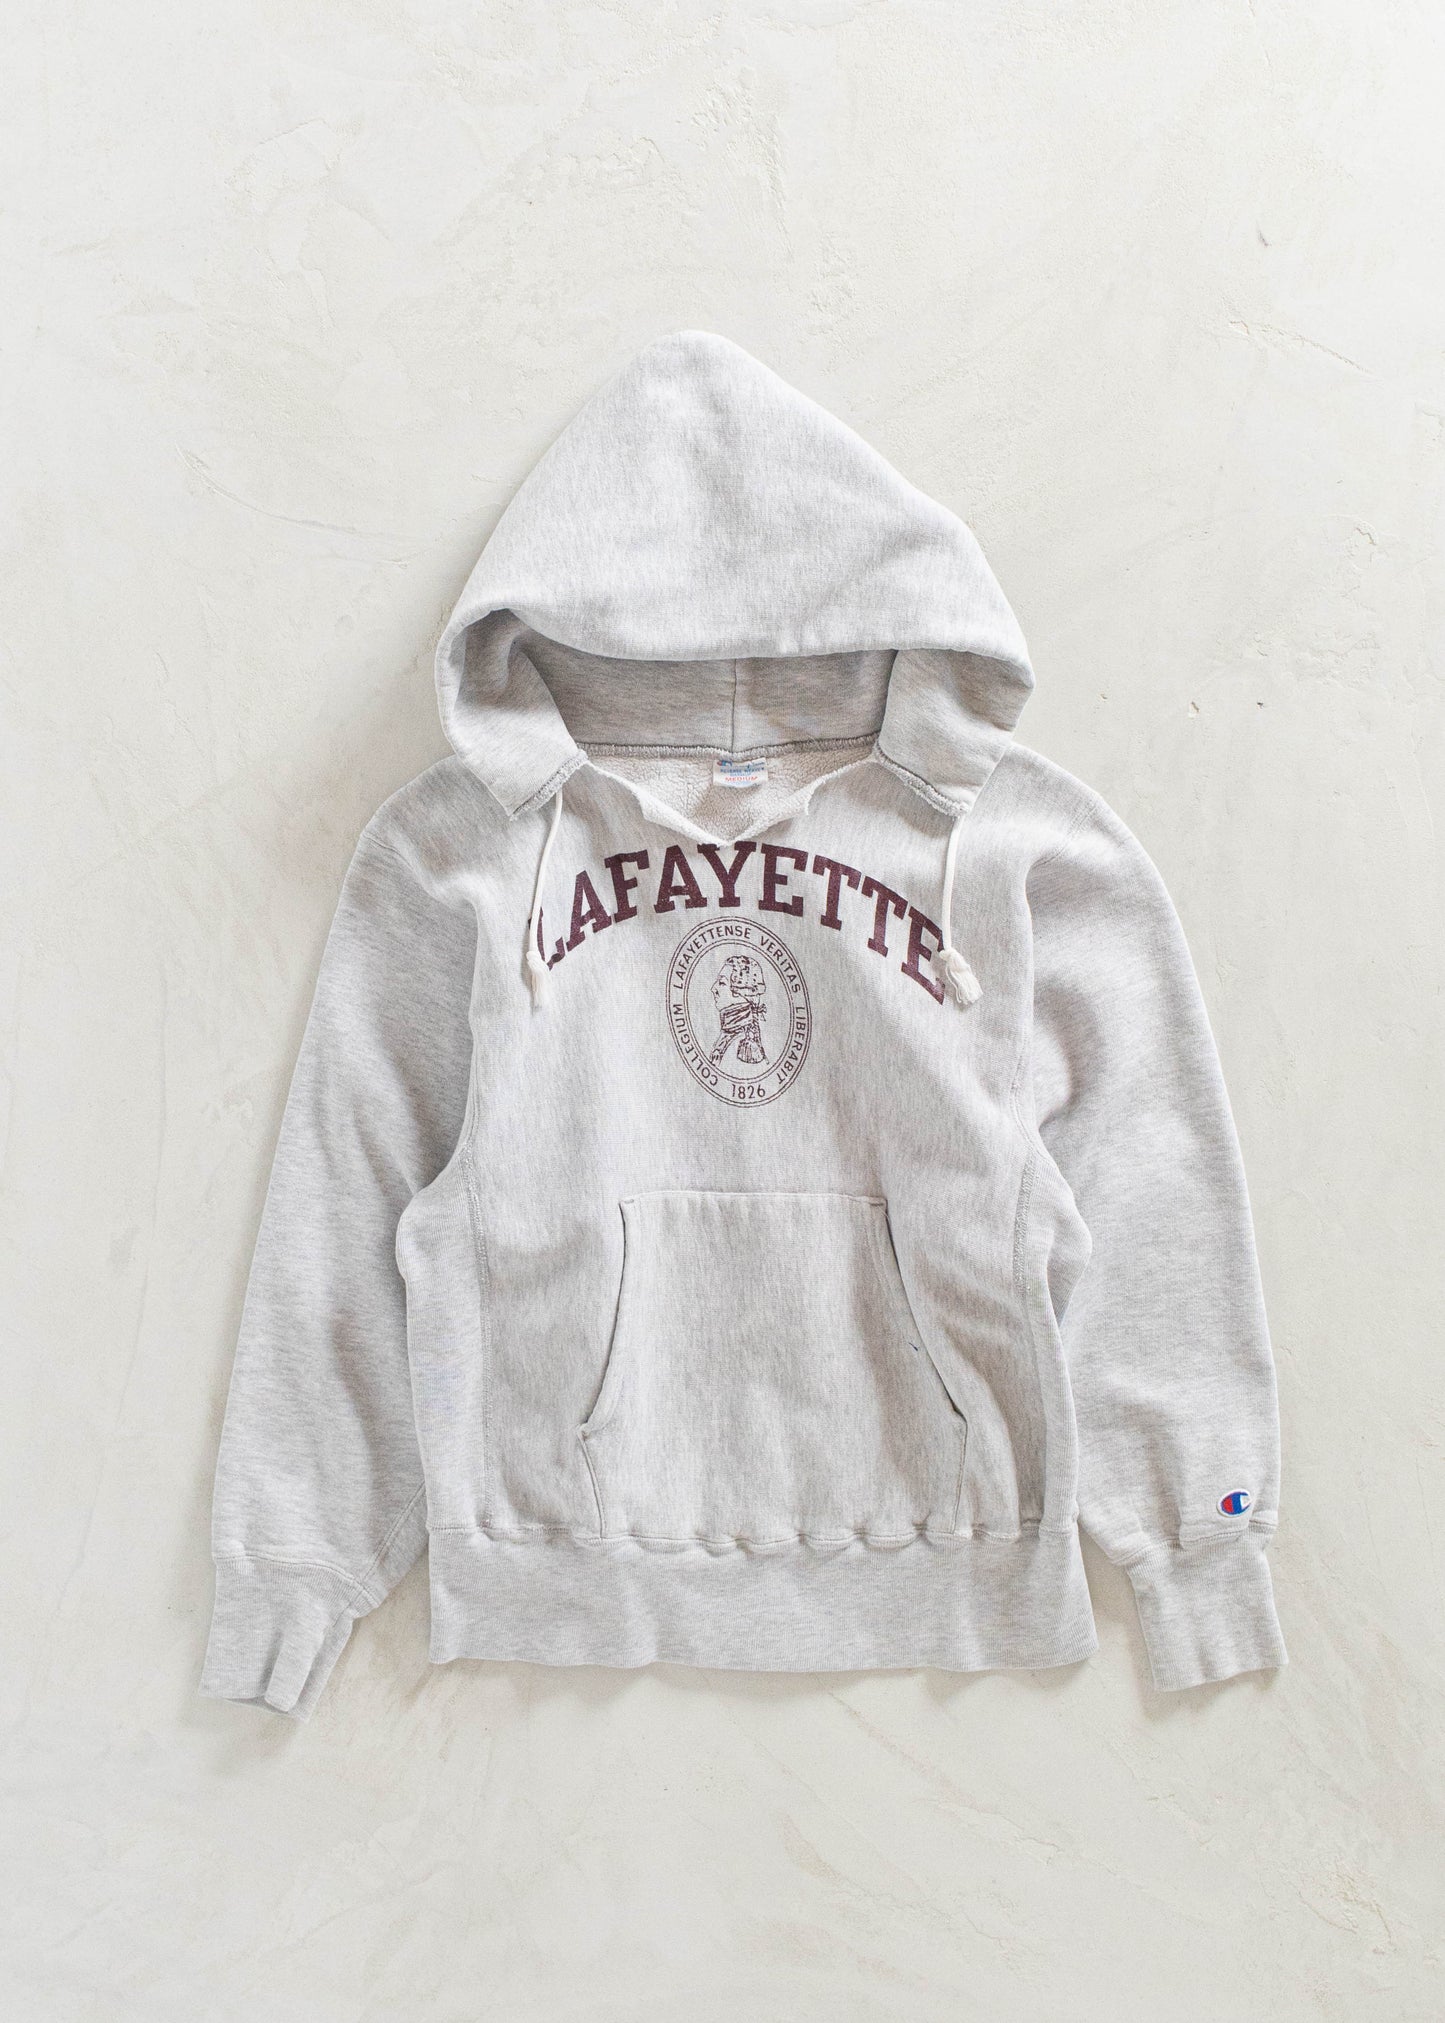 Vintage 1980s Champion Lafayette University Reverse Weave Hoodie Size S/M